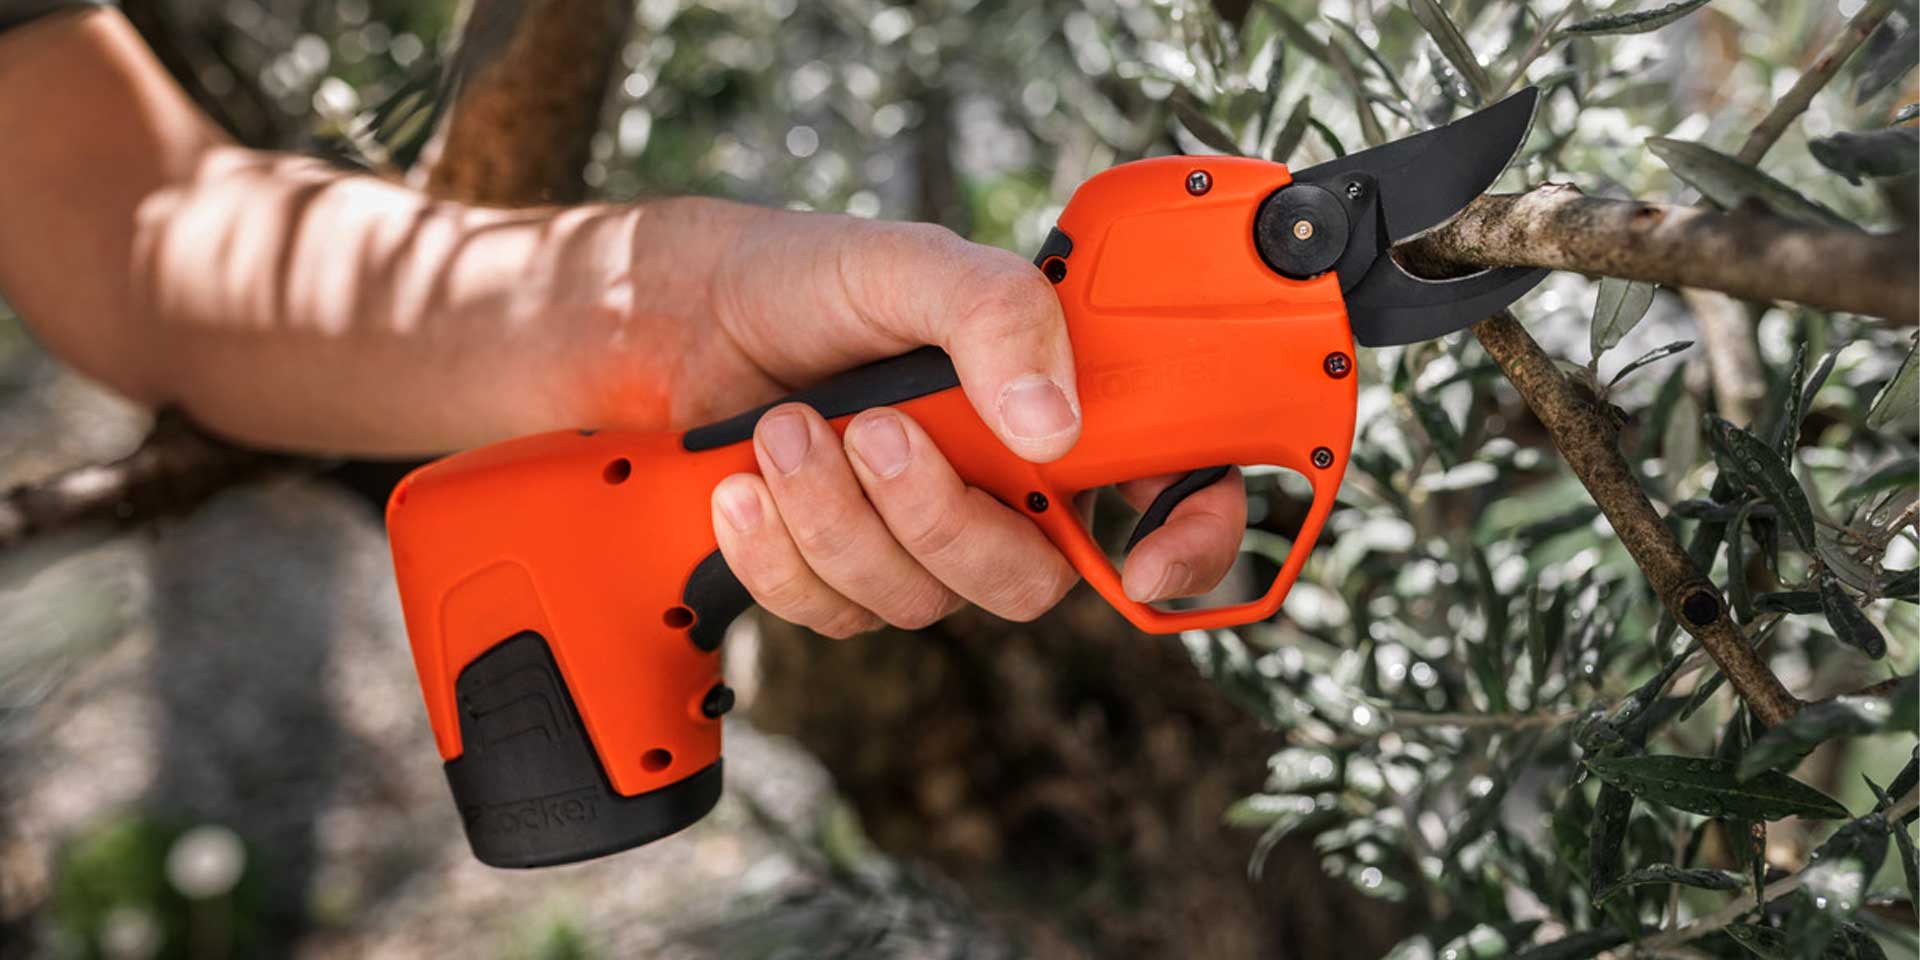 The new Vulcano E30 pruning shears for Stocker